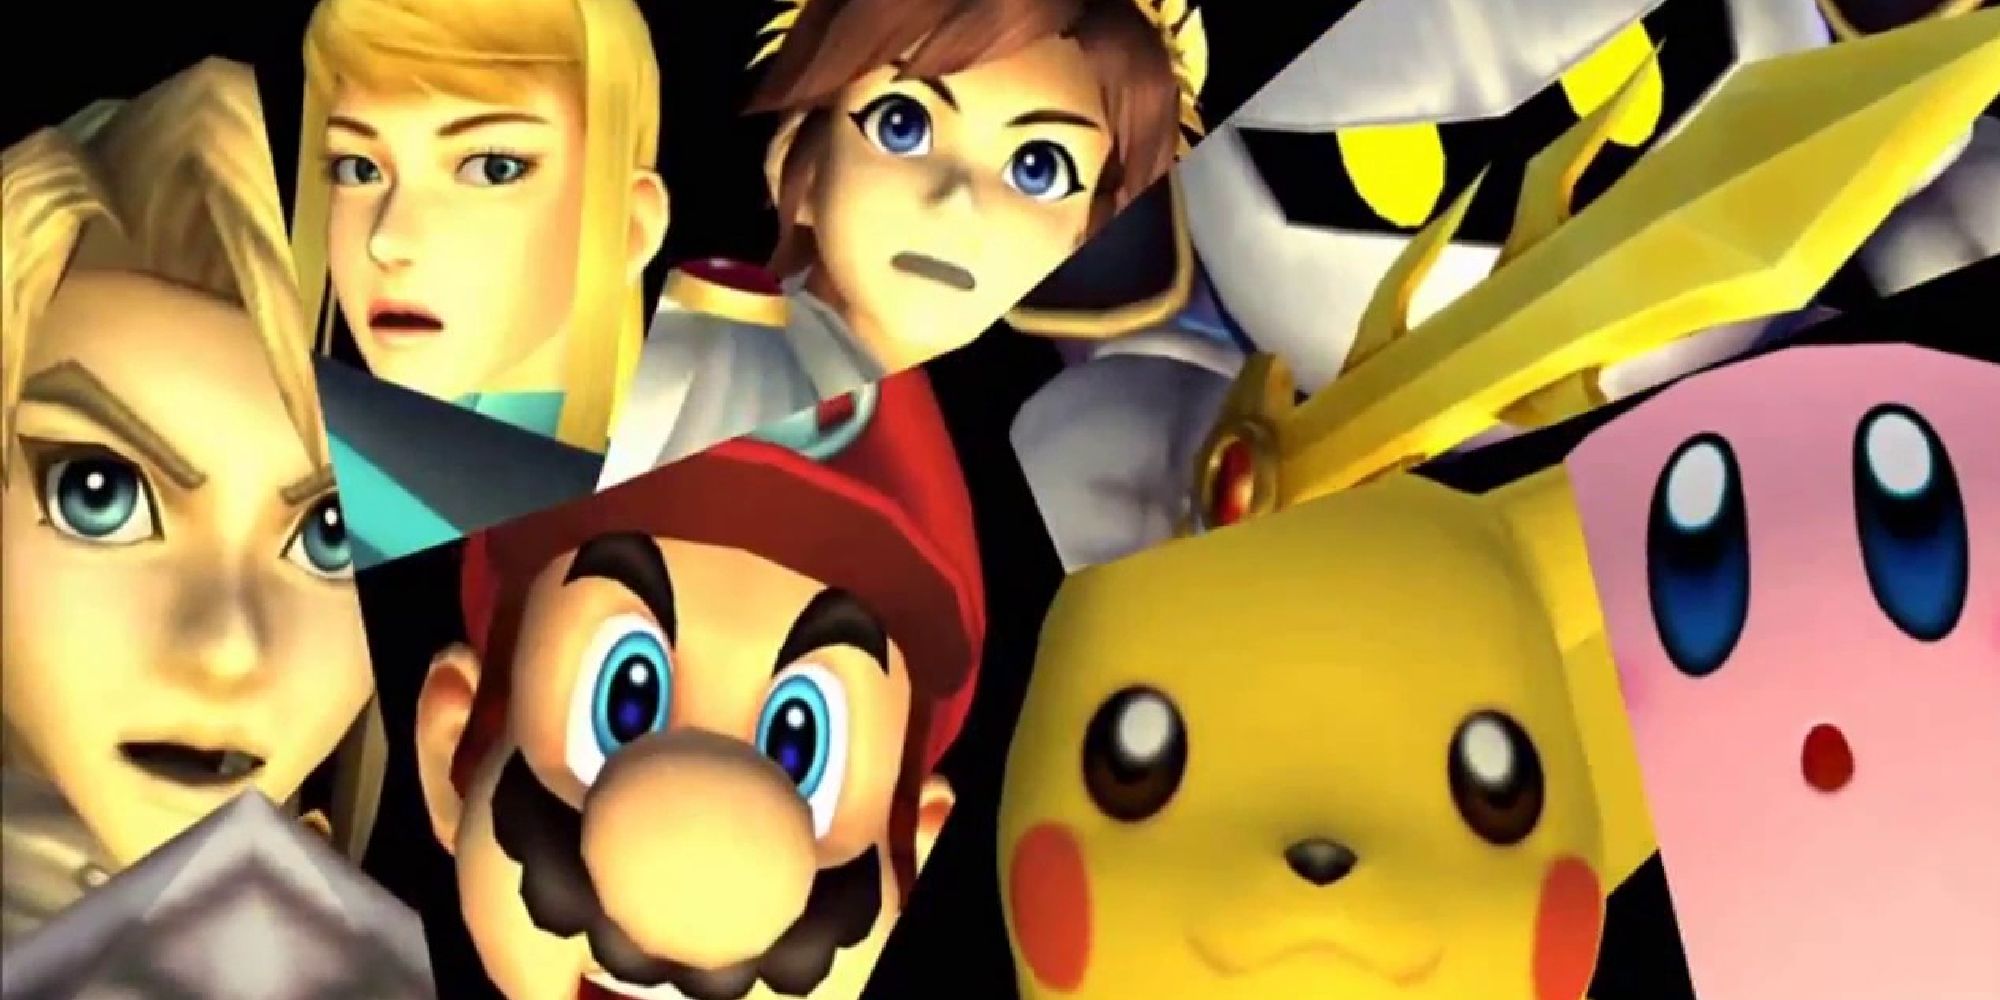 Link, Zero Suit Samus, Mario, Pit, Meta Knight, Pikachu, and Kirby all staring forward